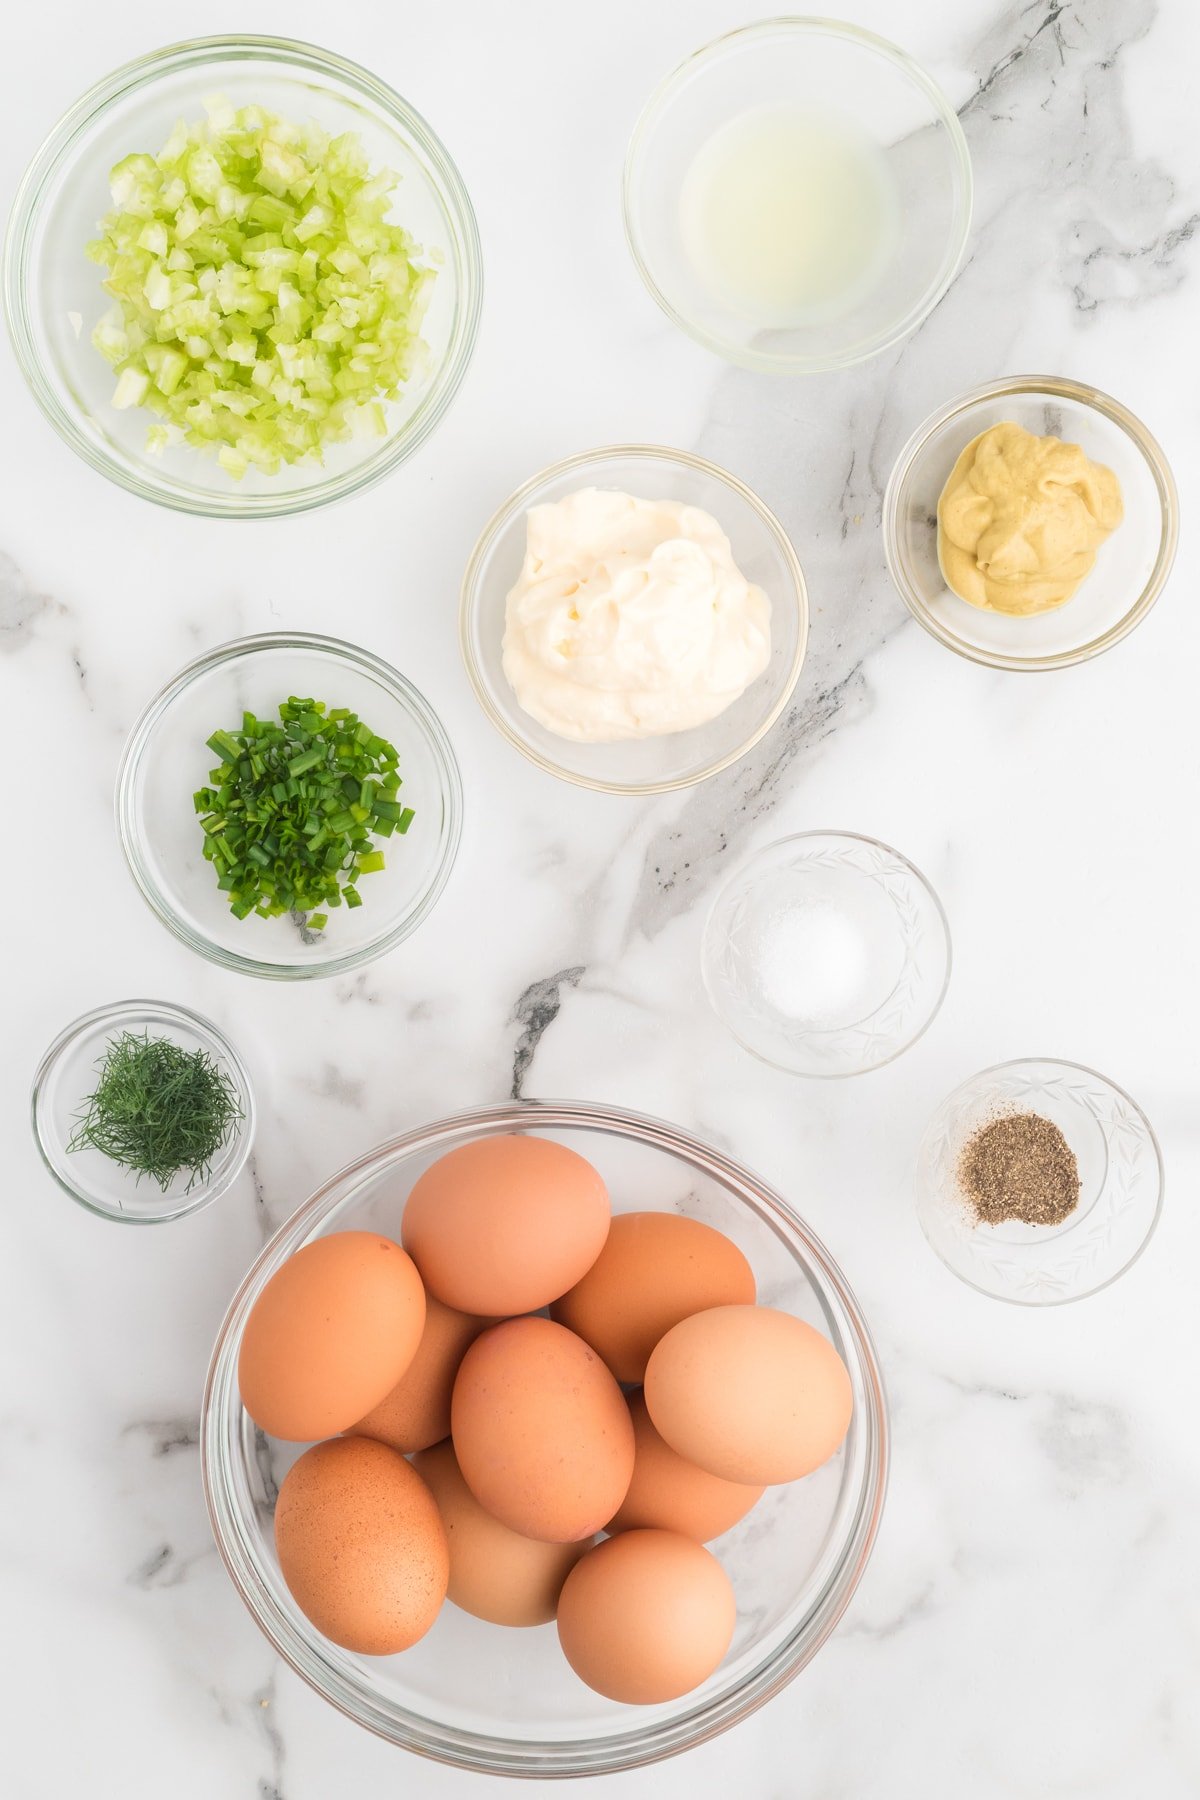 Egg salad ingredients